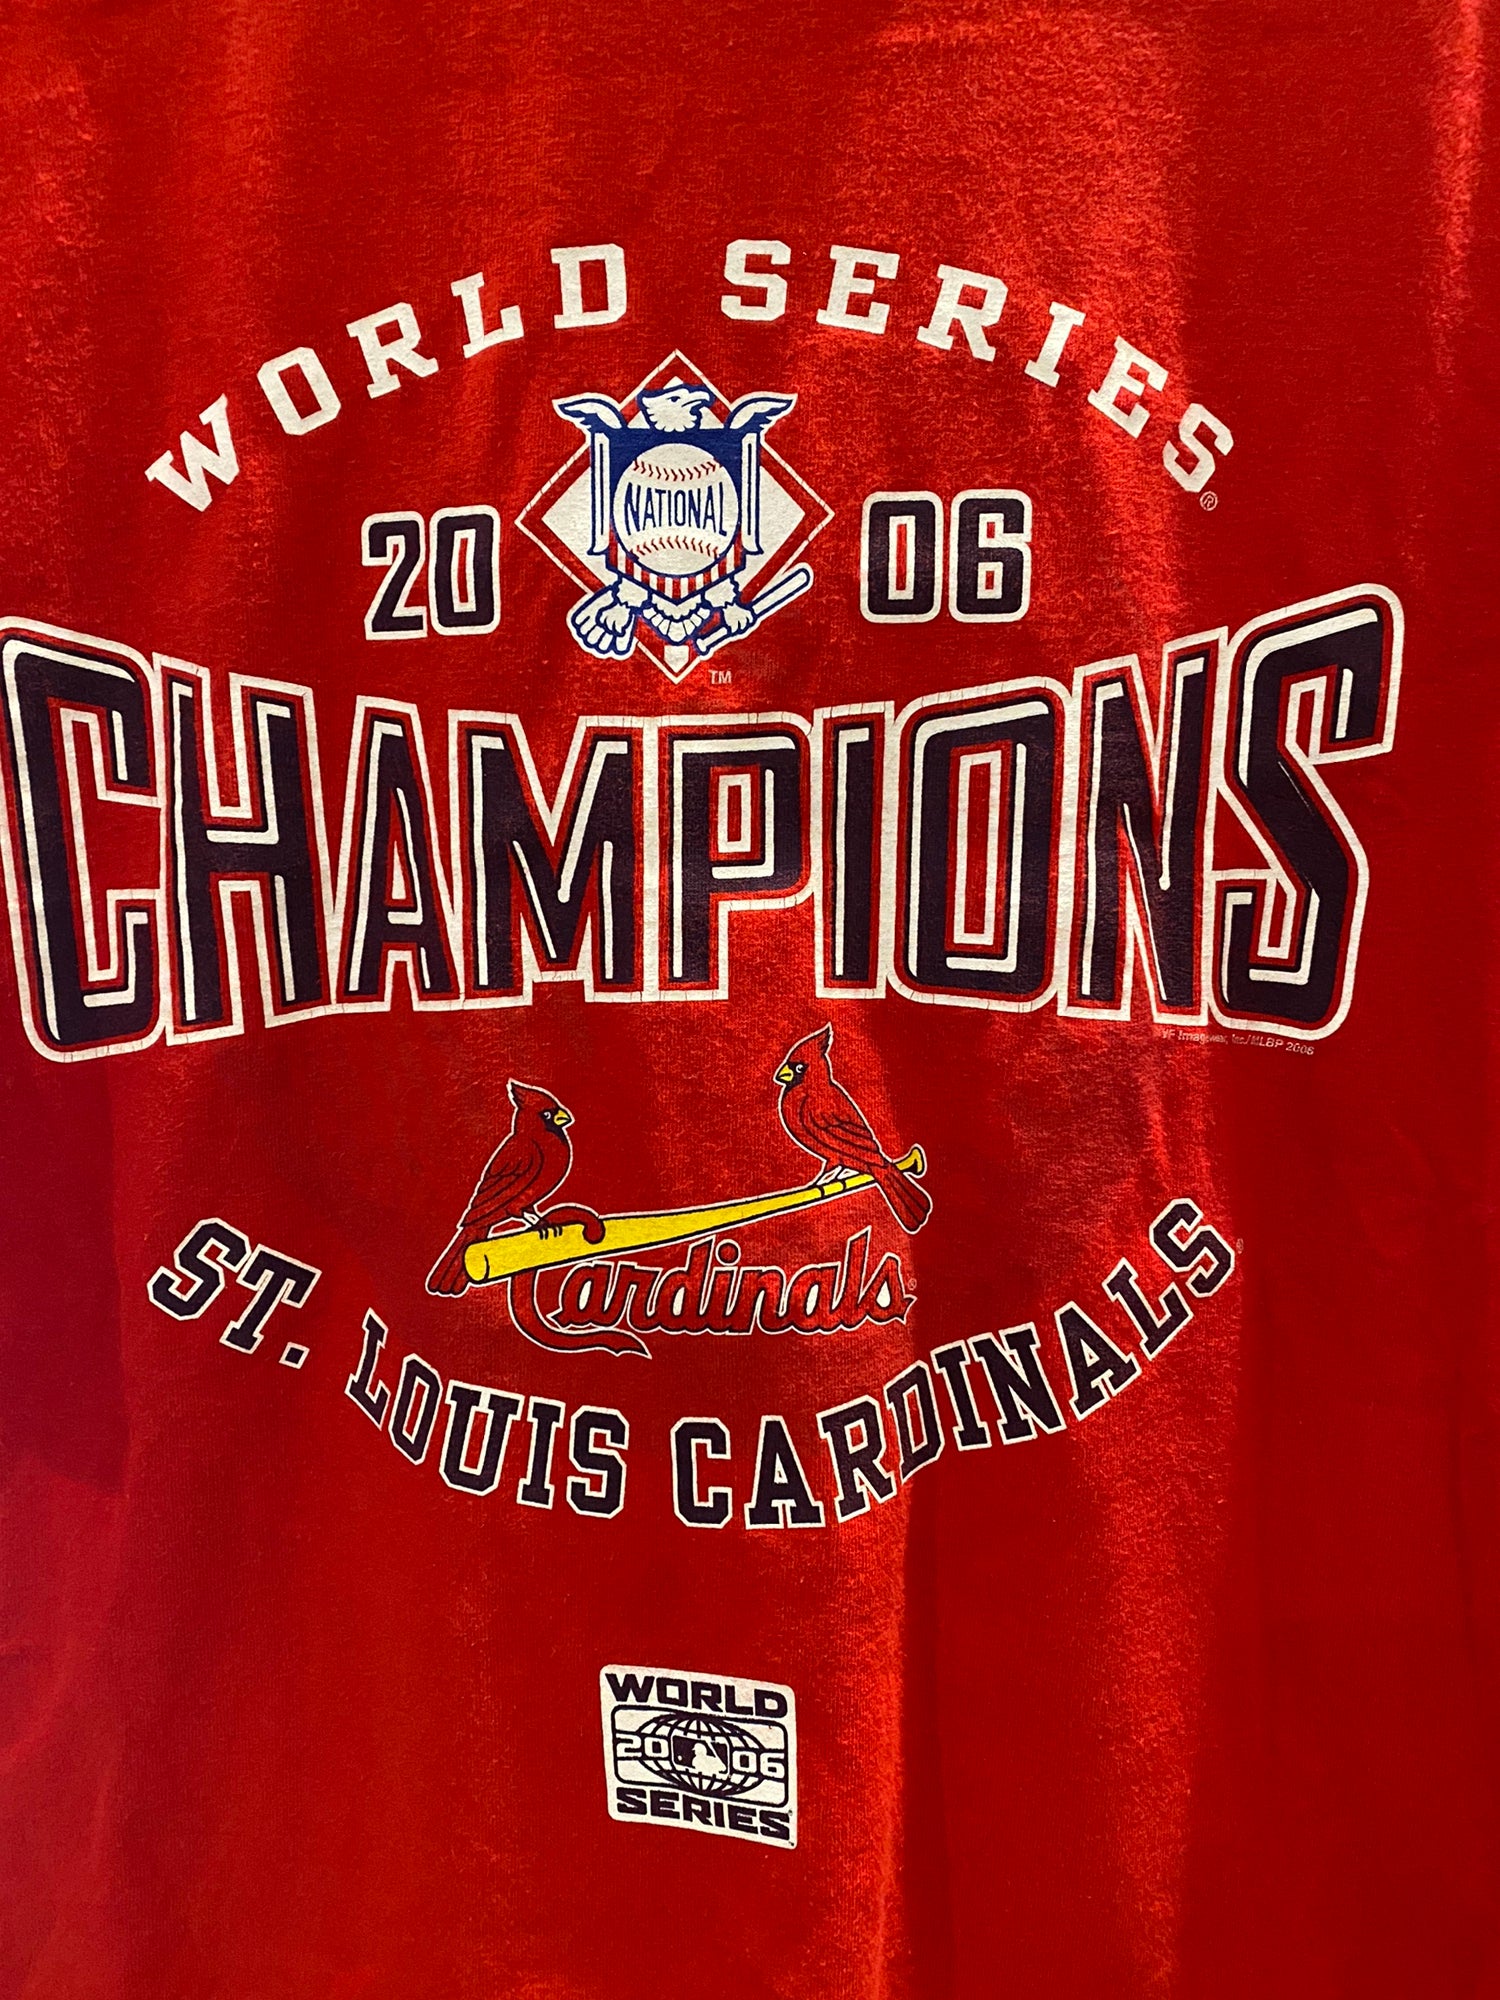 Vintage 1985 World Series World Champion St Louis Cardinals T-shirt